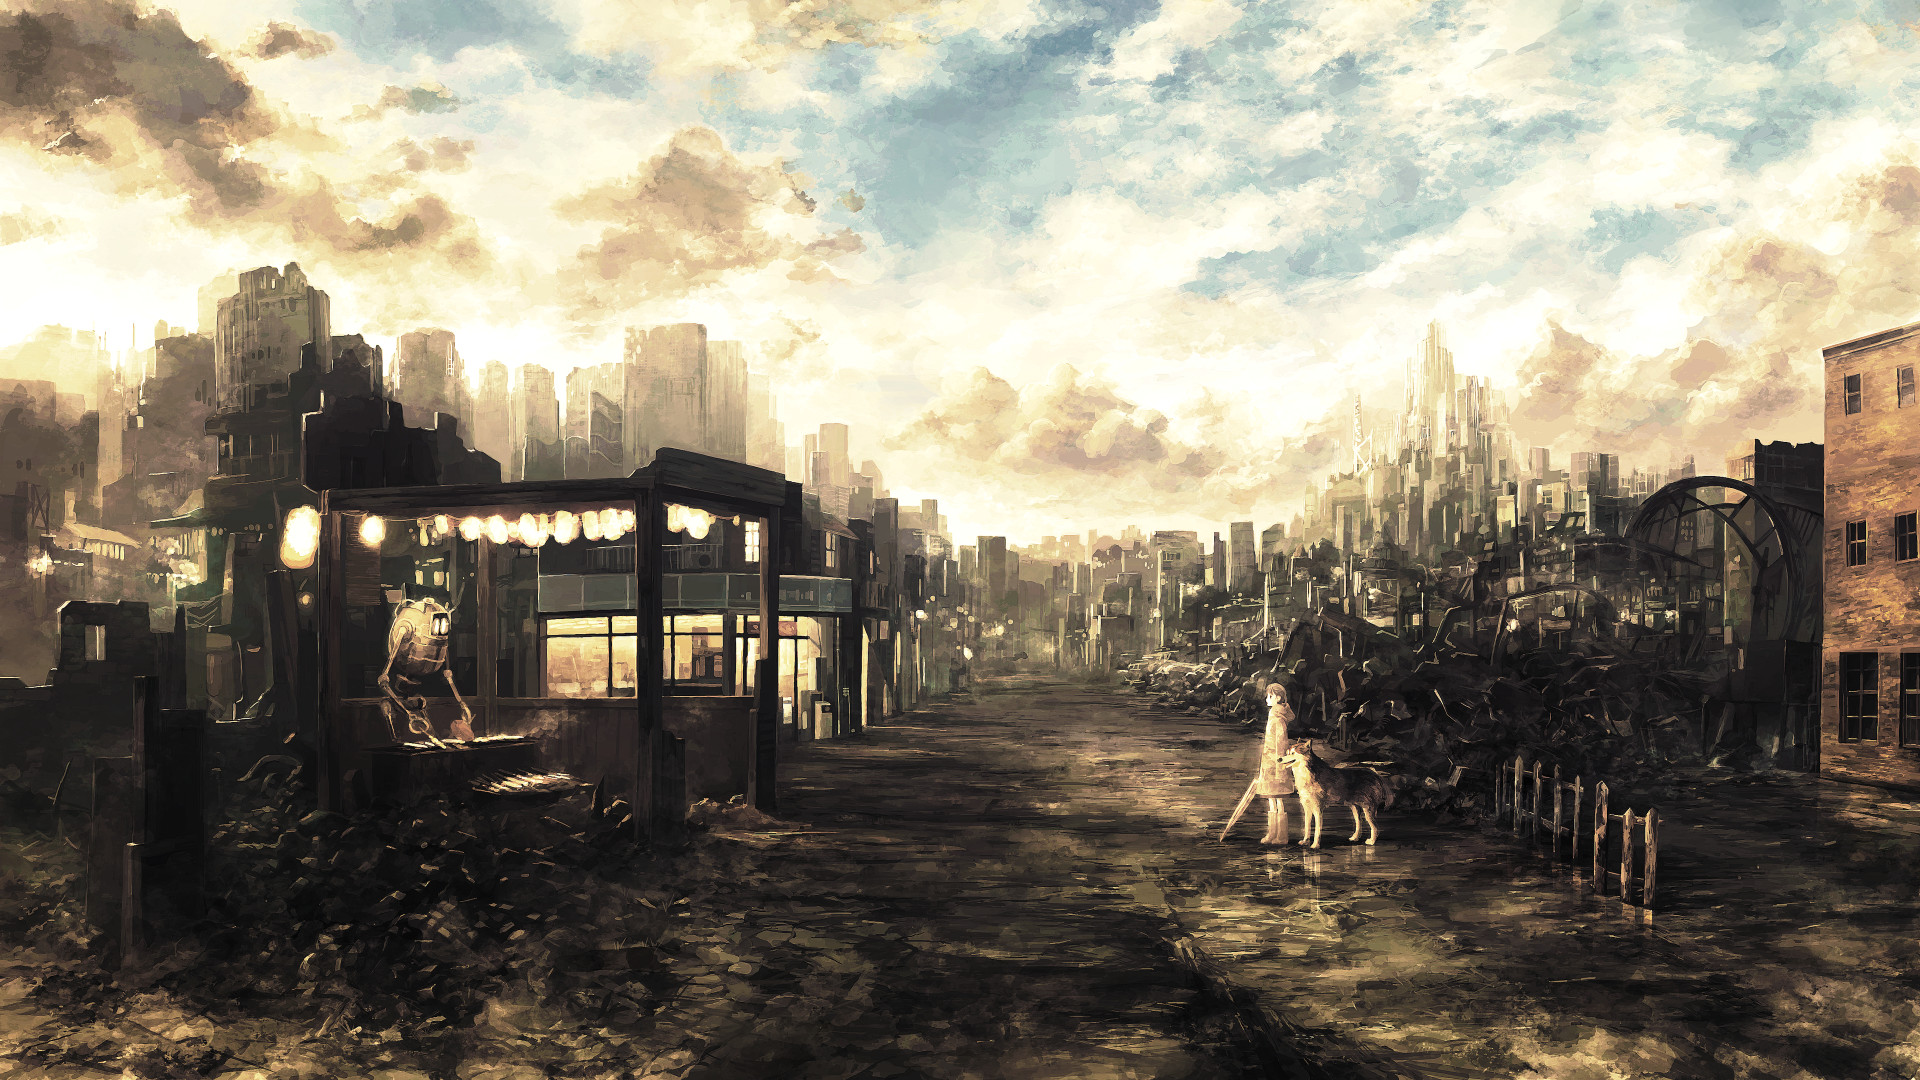 133936 city fantasy art anime girls wasteland ruin apocalyptic dog mixtape 2 manga 19201080 Apokalipsa zombie sf Pinterest